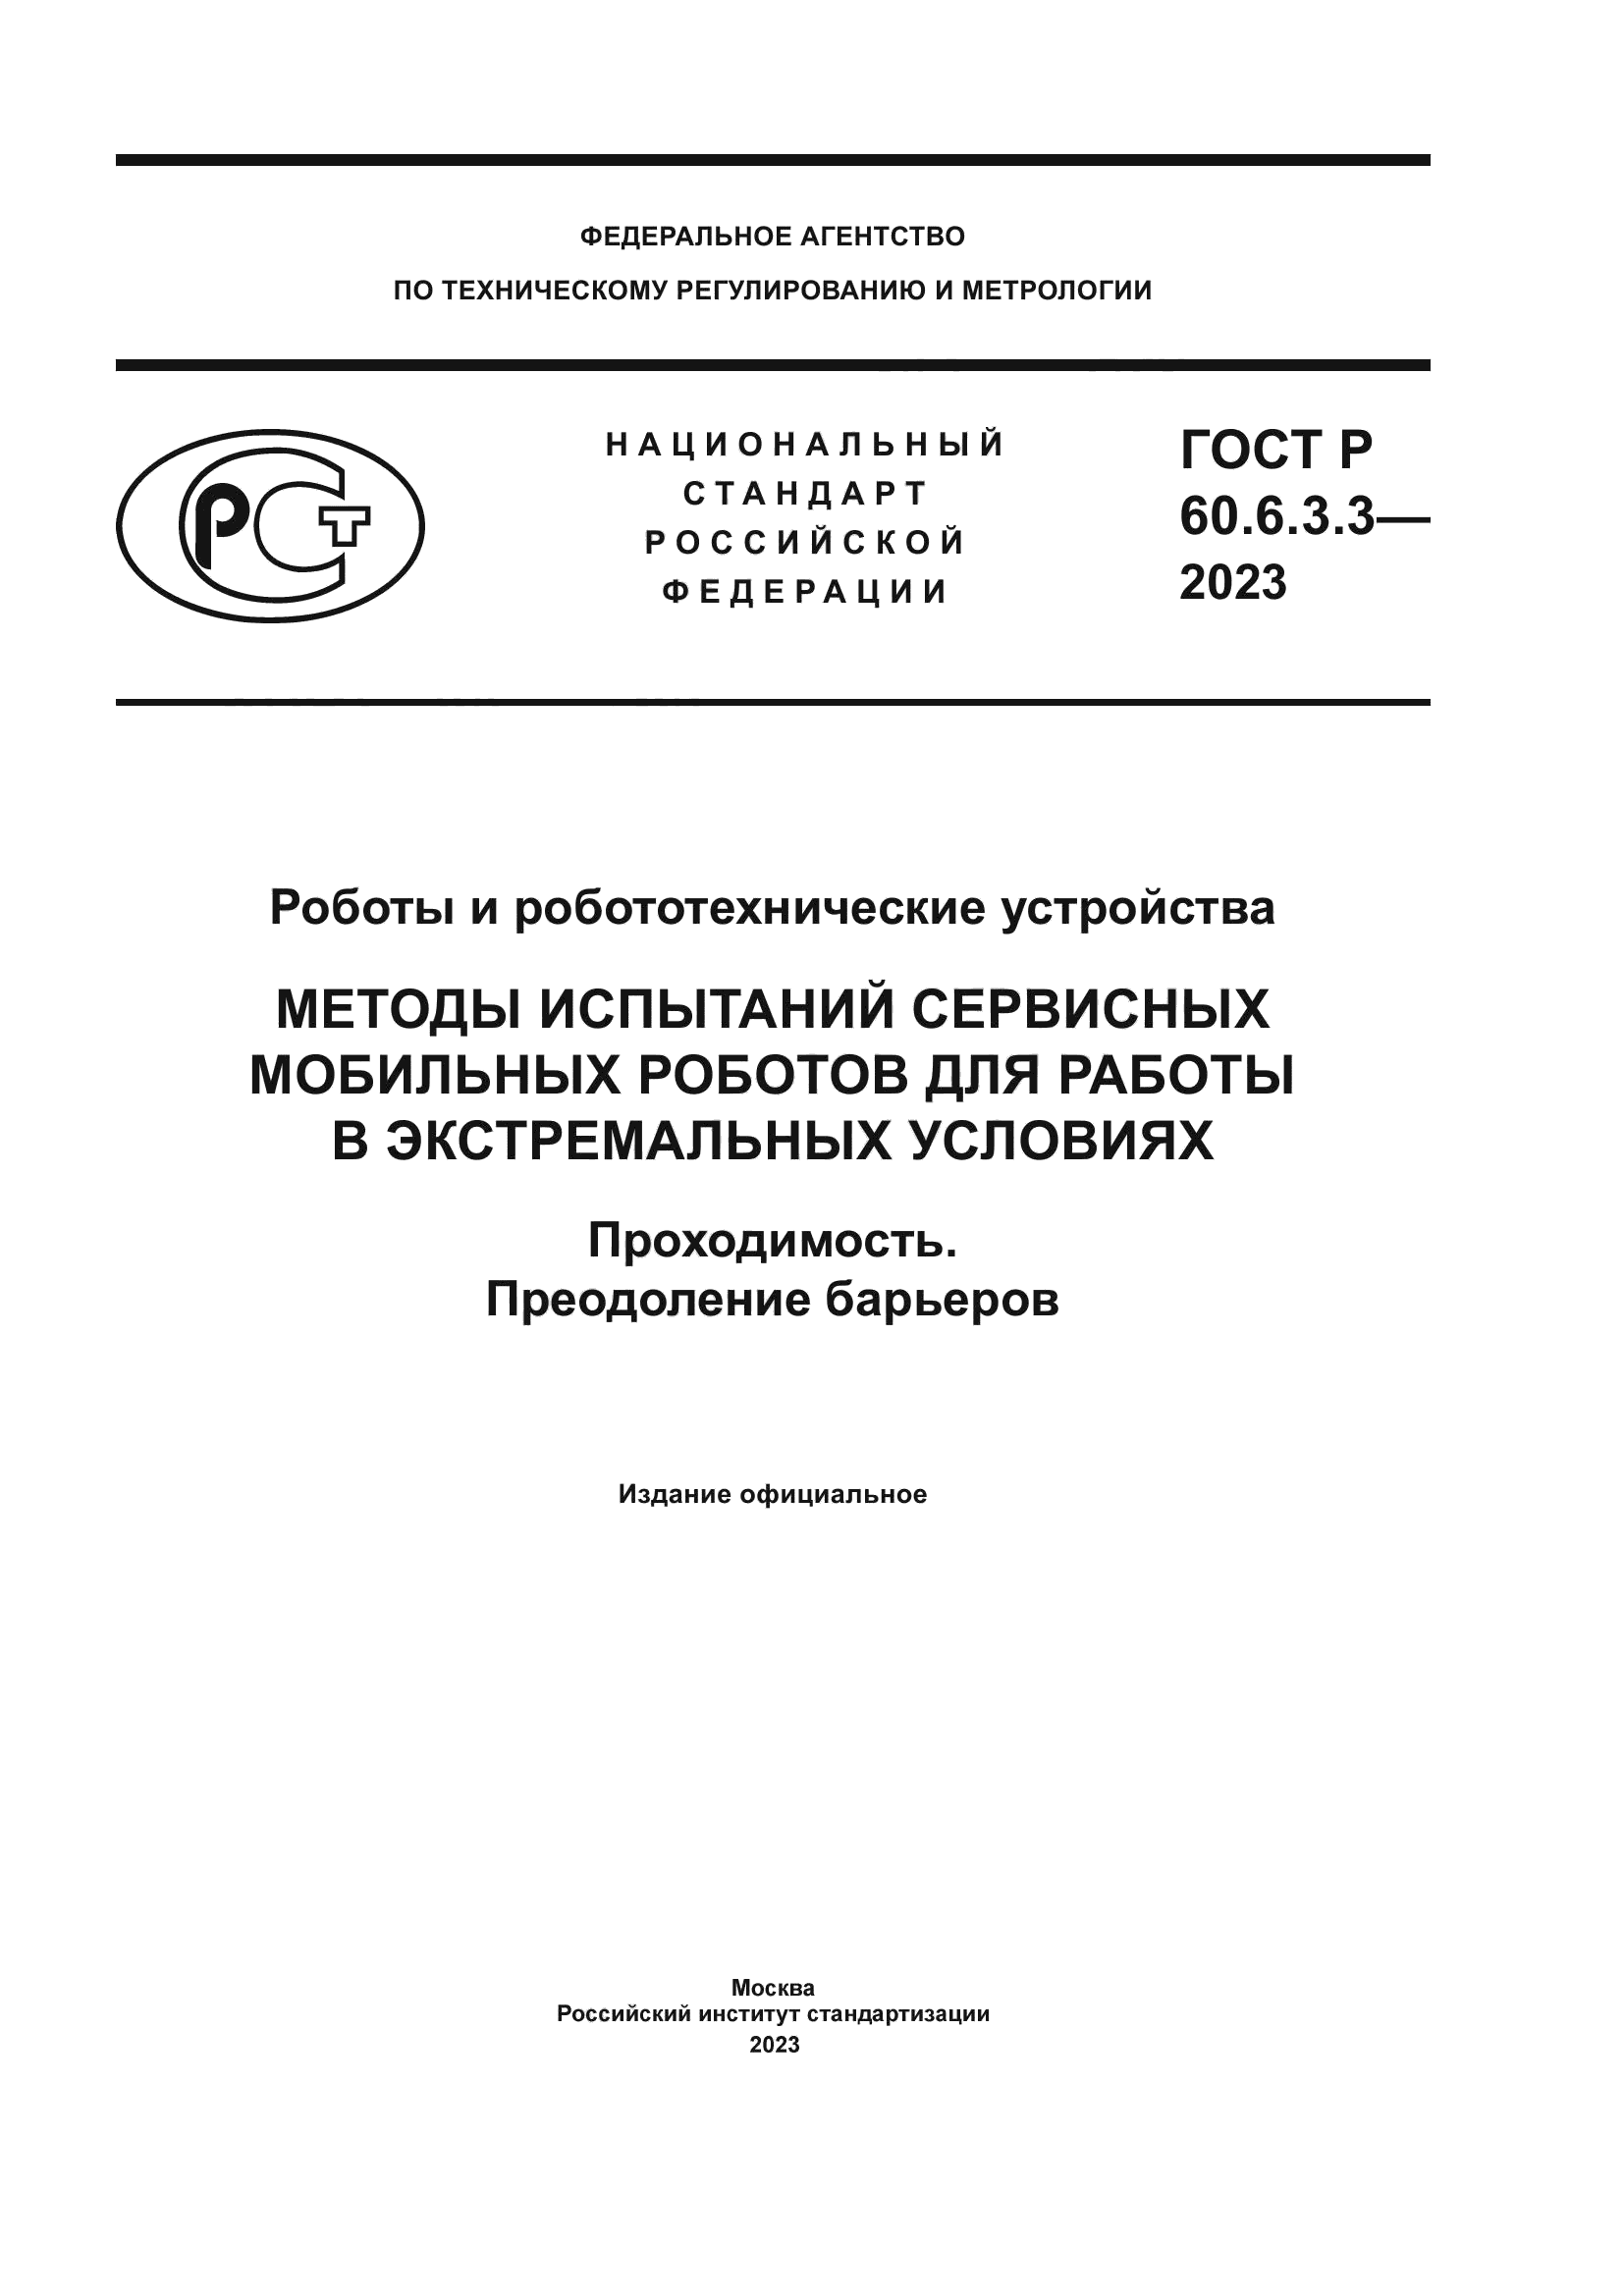 ГОСТ Р 60.6.3.3-2023